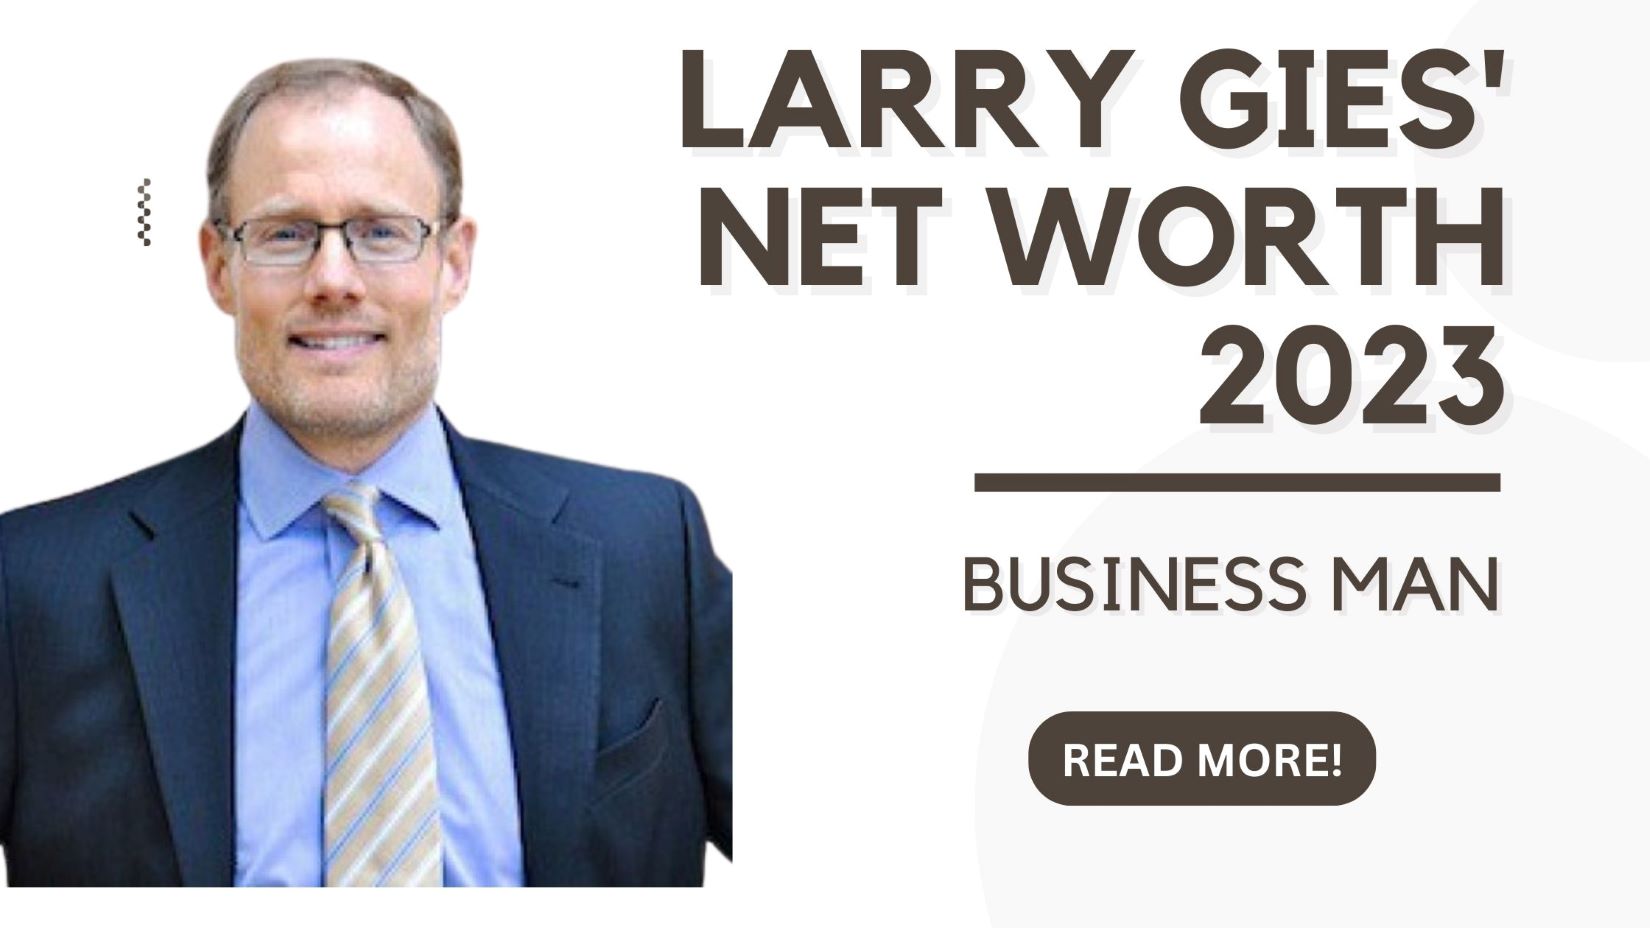 Larry Gies' Net Worth 2023